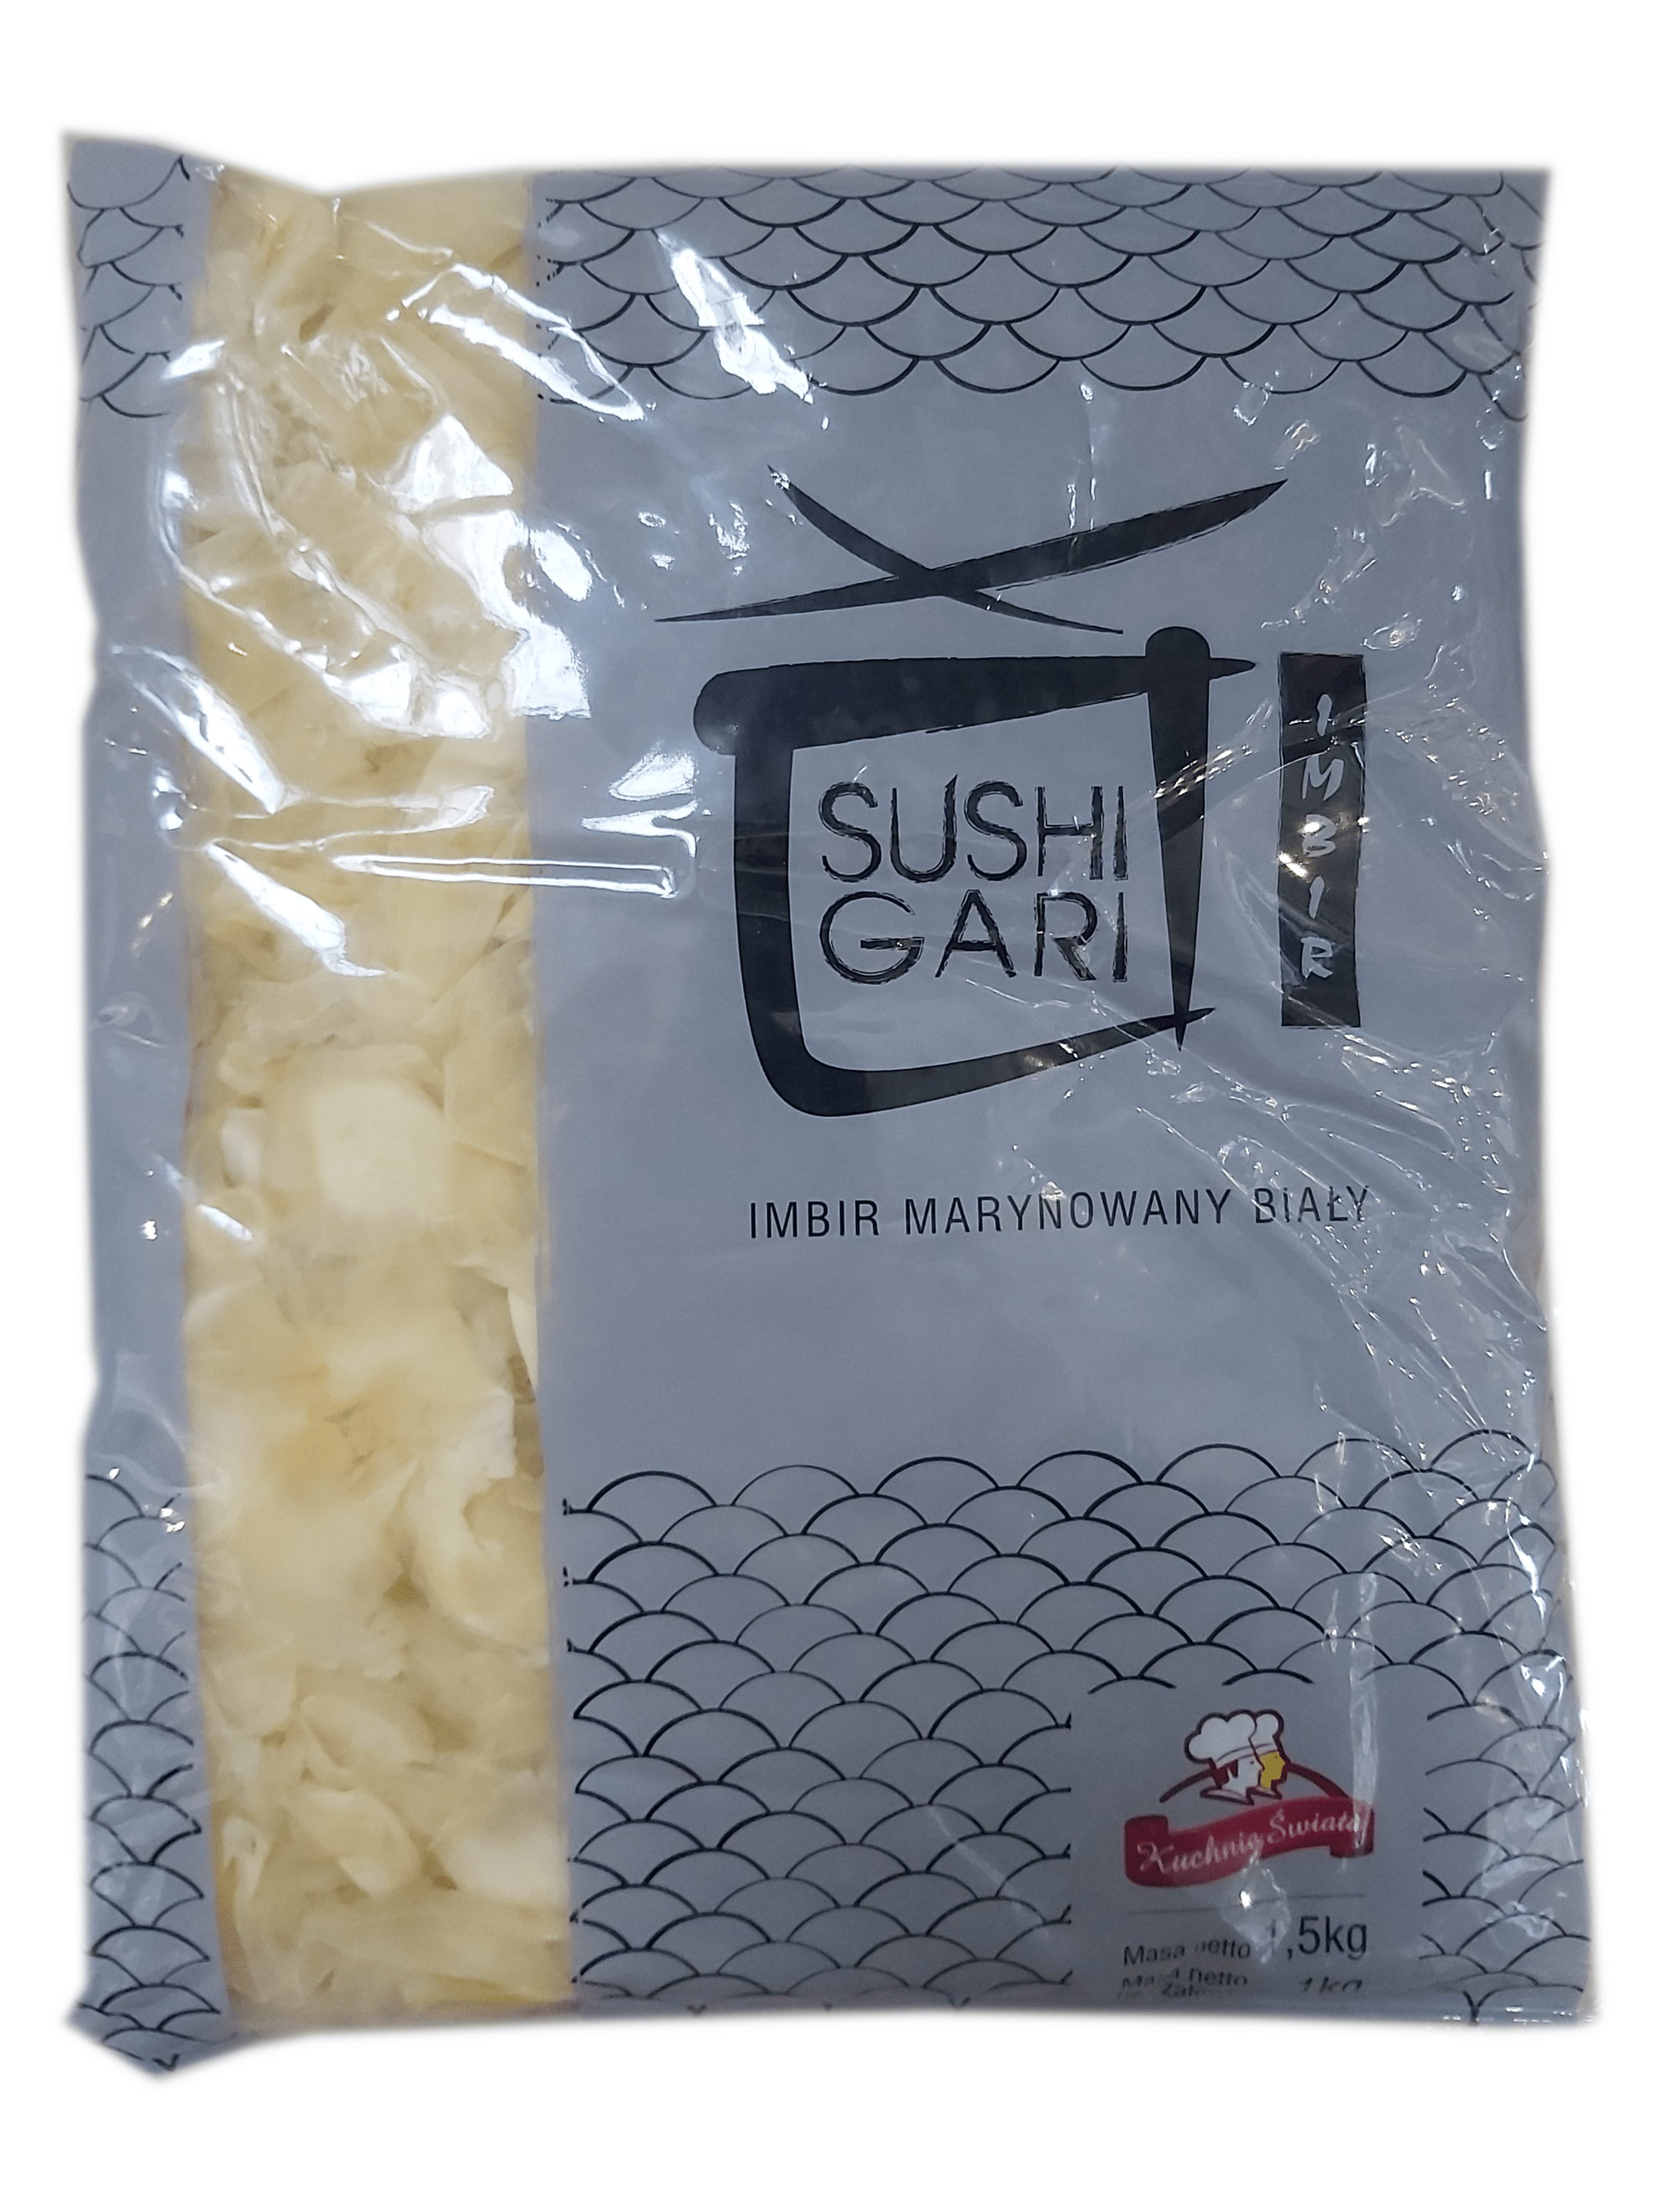 Imbir marynowany biały Sushi Gari1kg netto,1,5kg/10